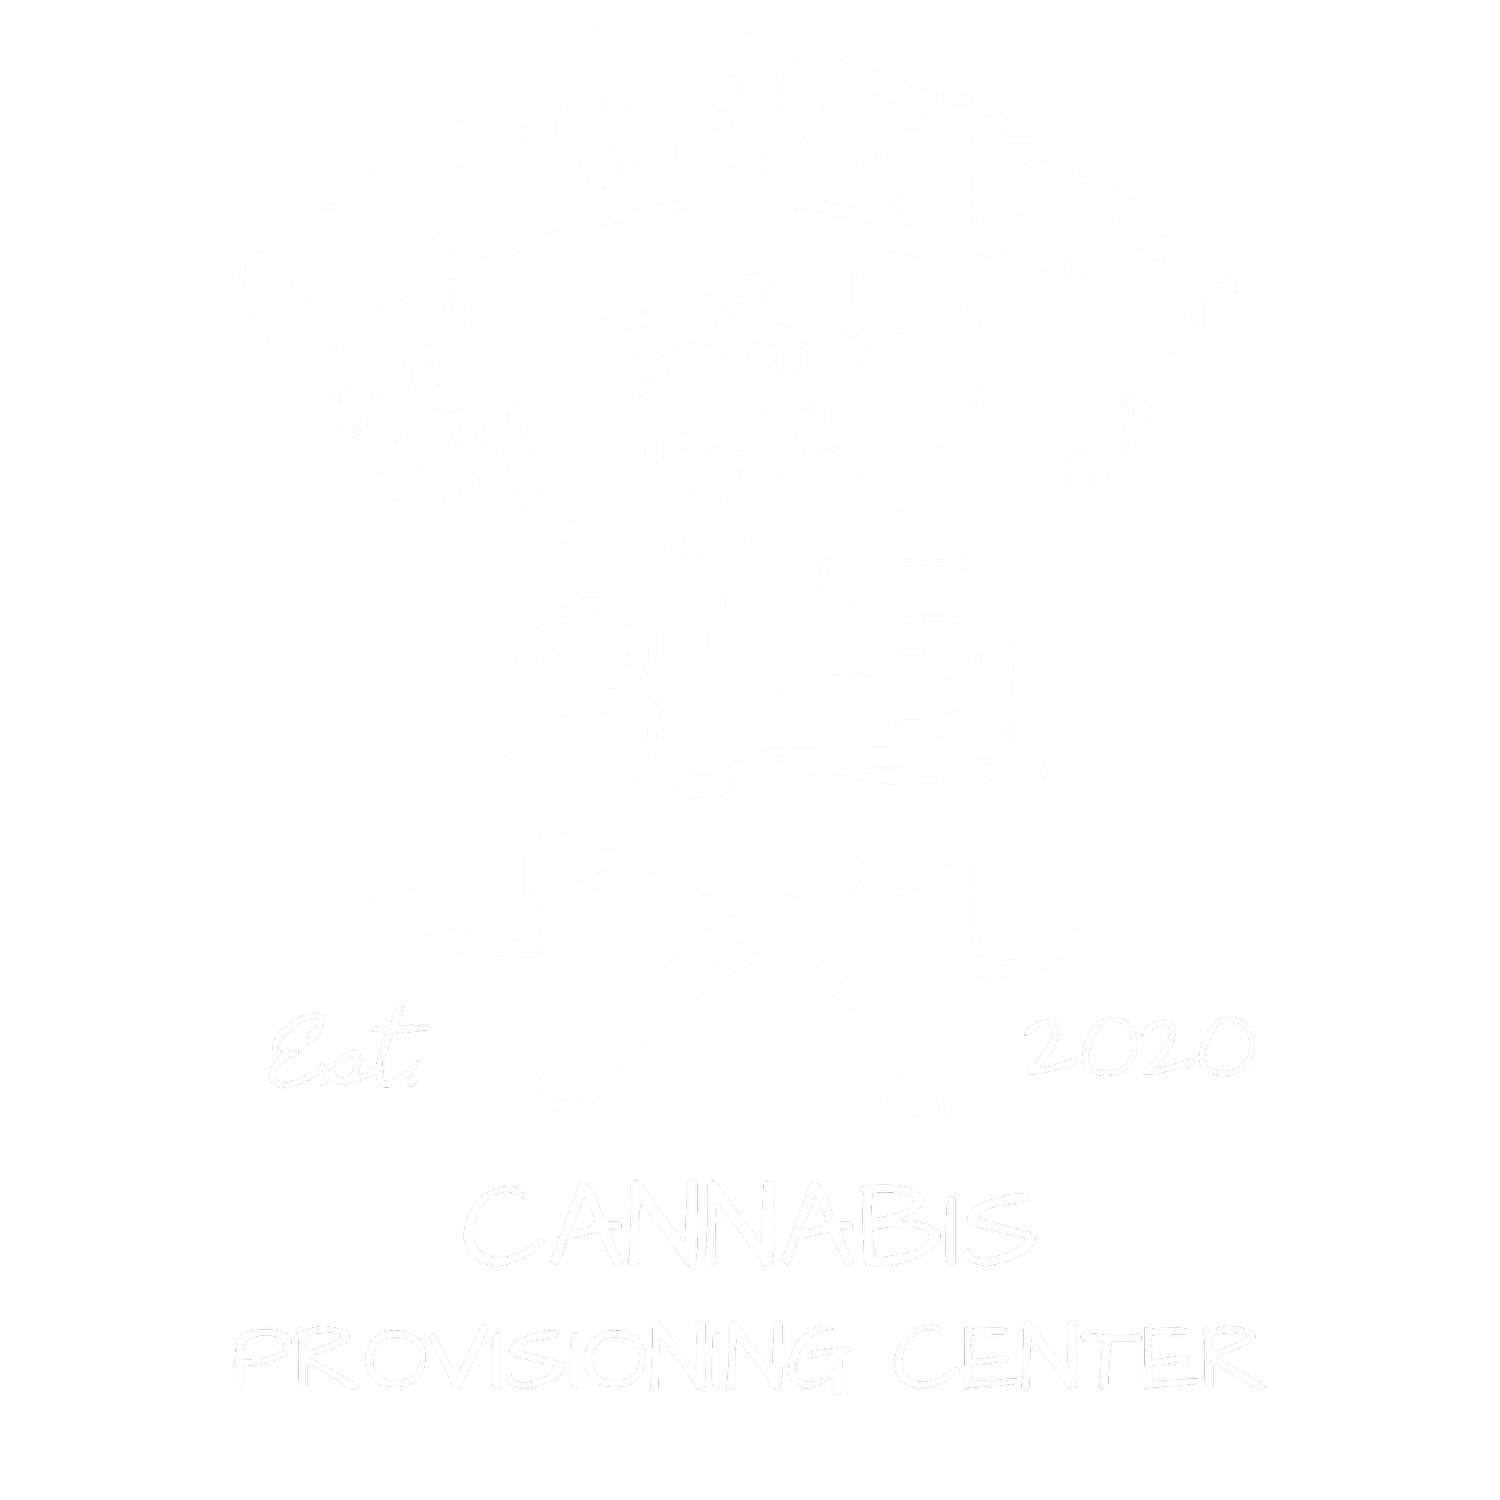 Lumberjack Provisioning Center